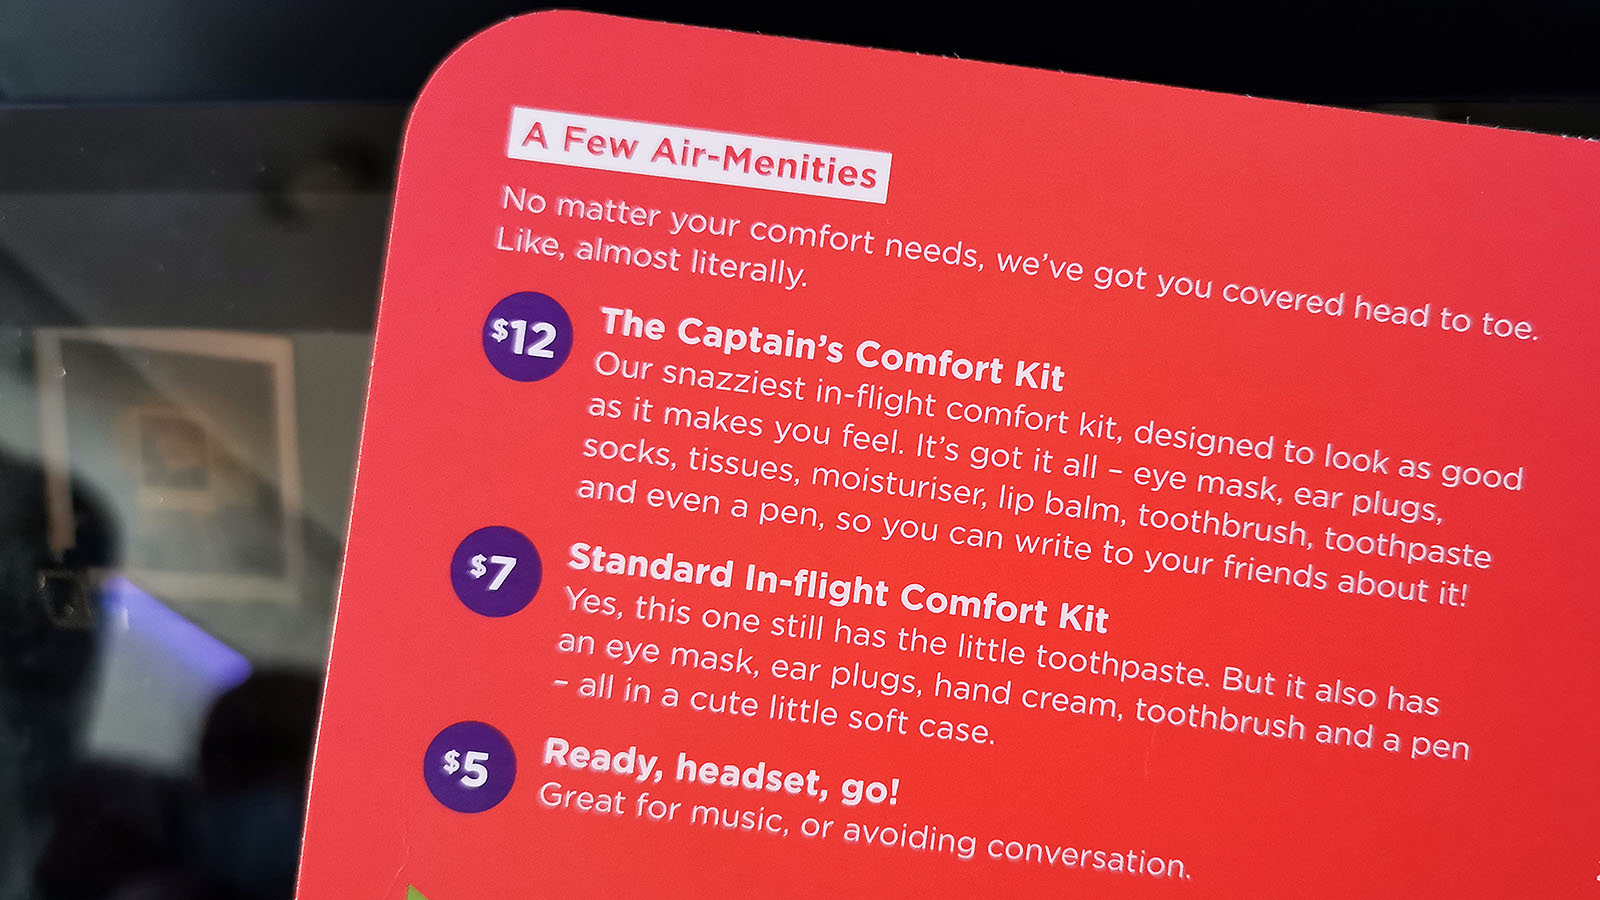 Virgin Australia Boeing 737 Economy Class